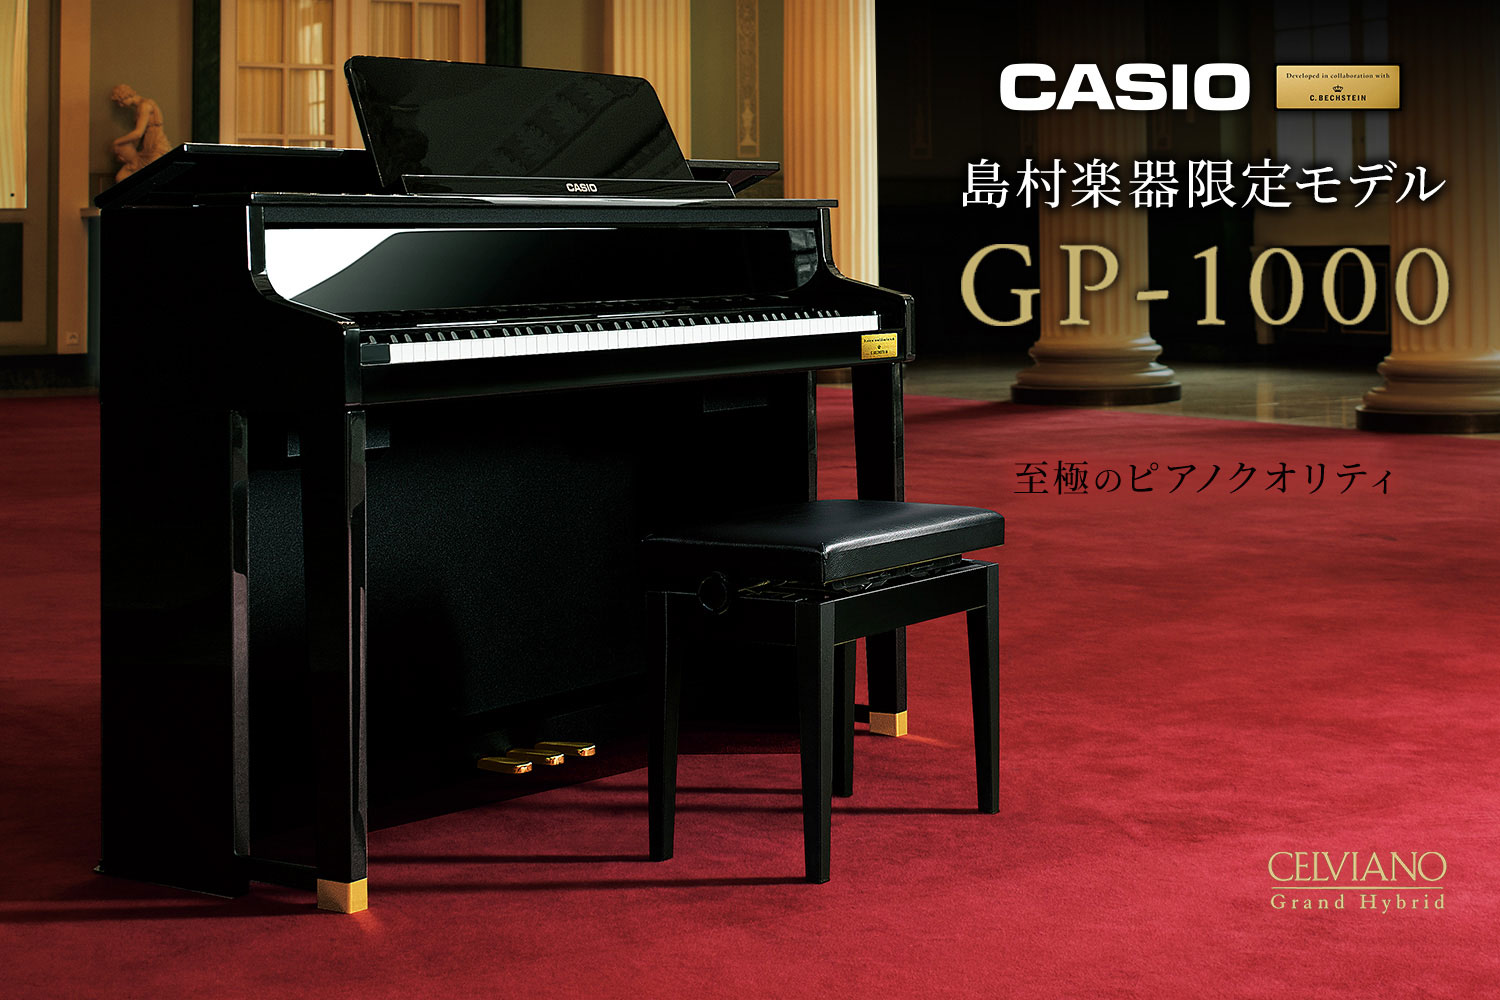 CASIO×C.ベヒシュタイン コラボレーション電子ピアノに島村楽器限定モデル「GP-1000」が新登場！店頭展示中！！